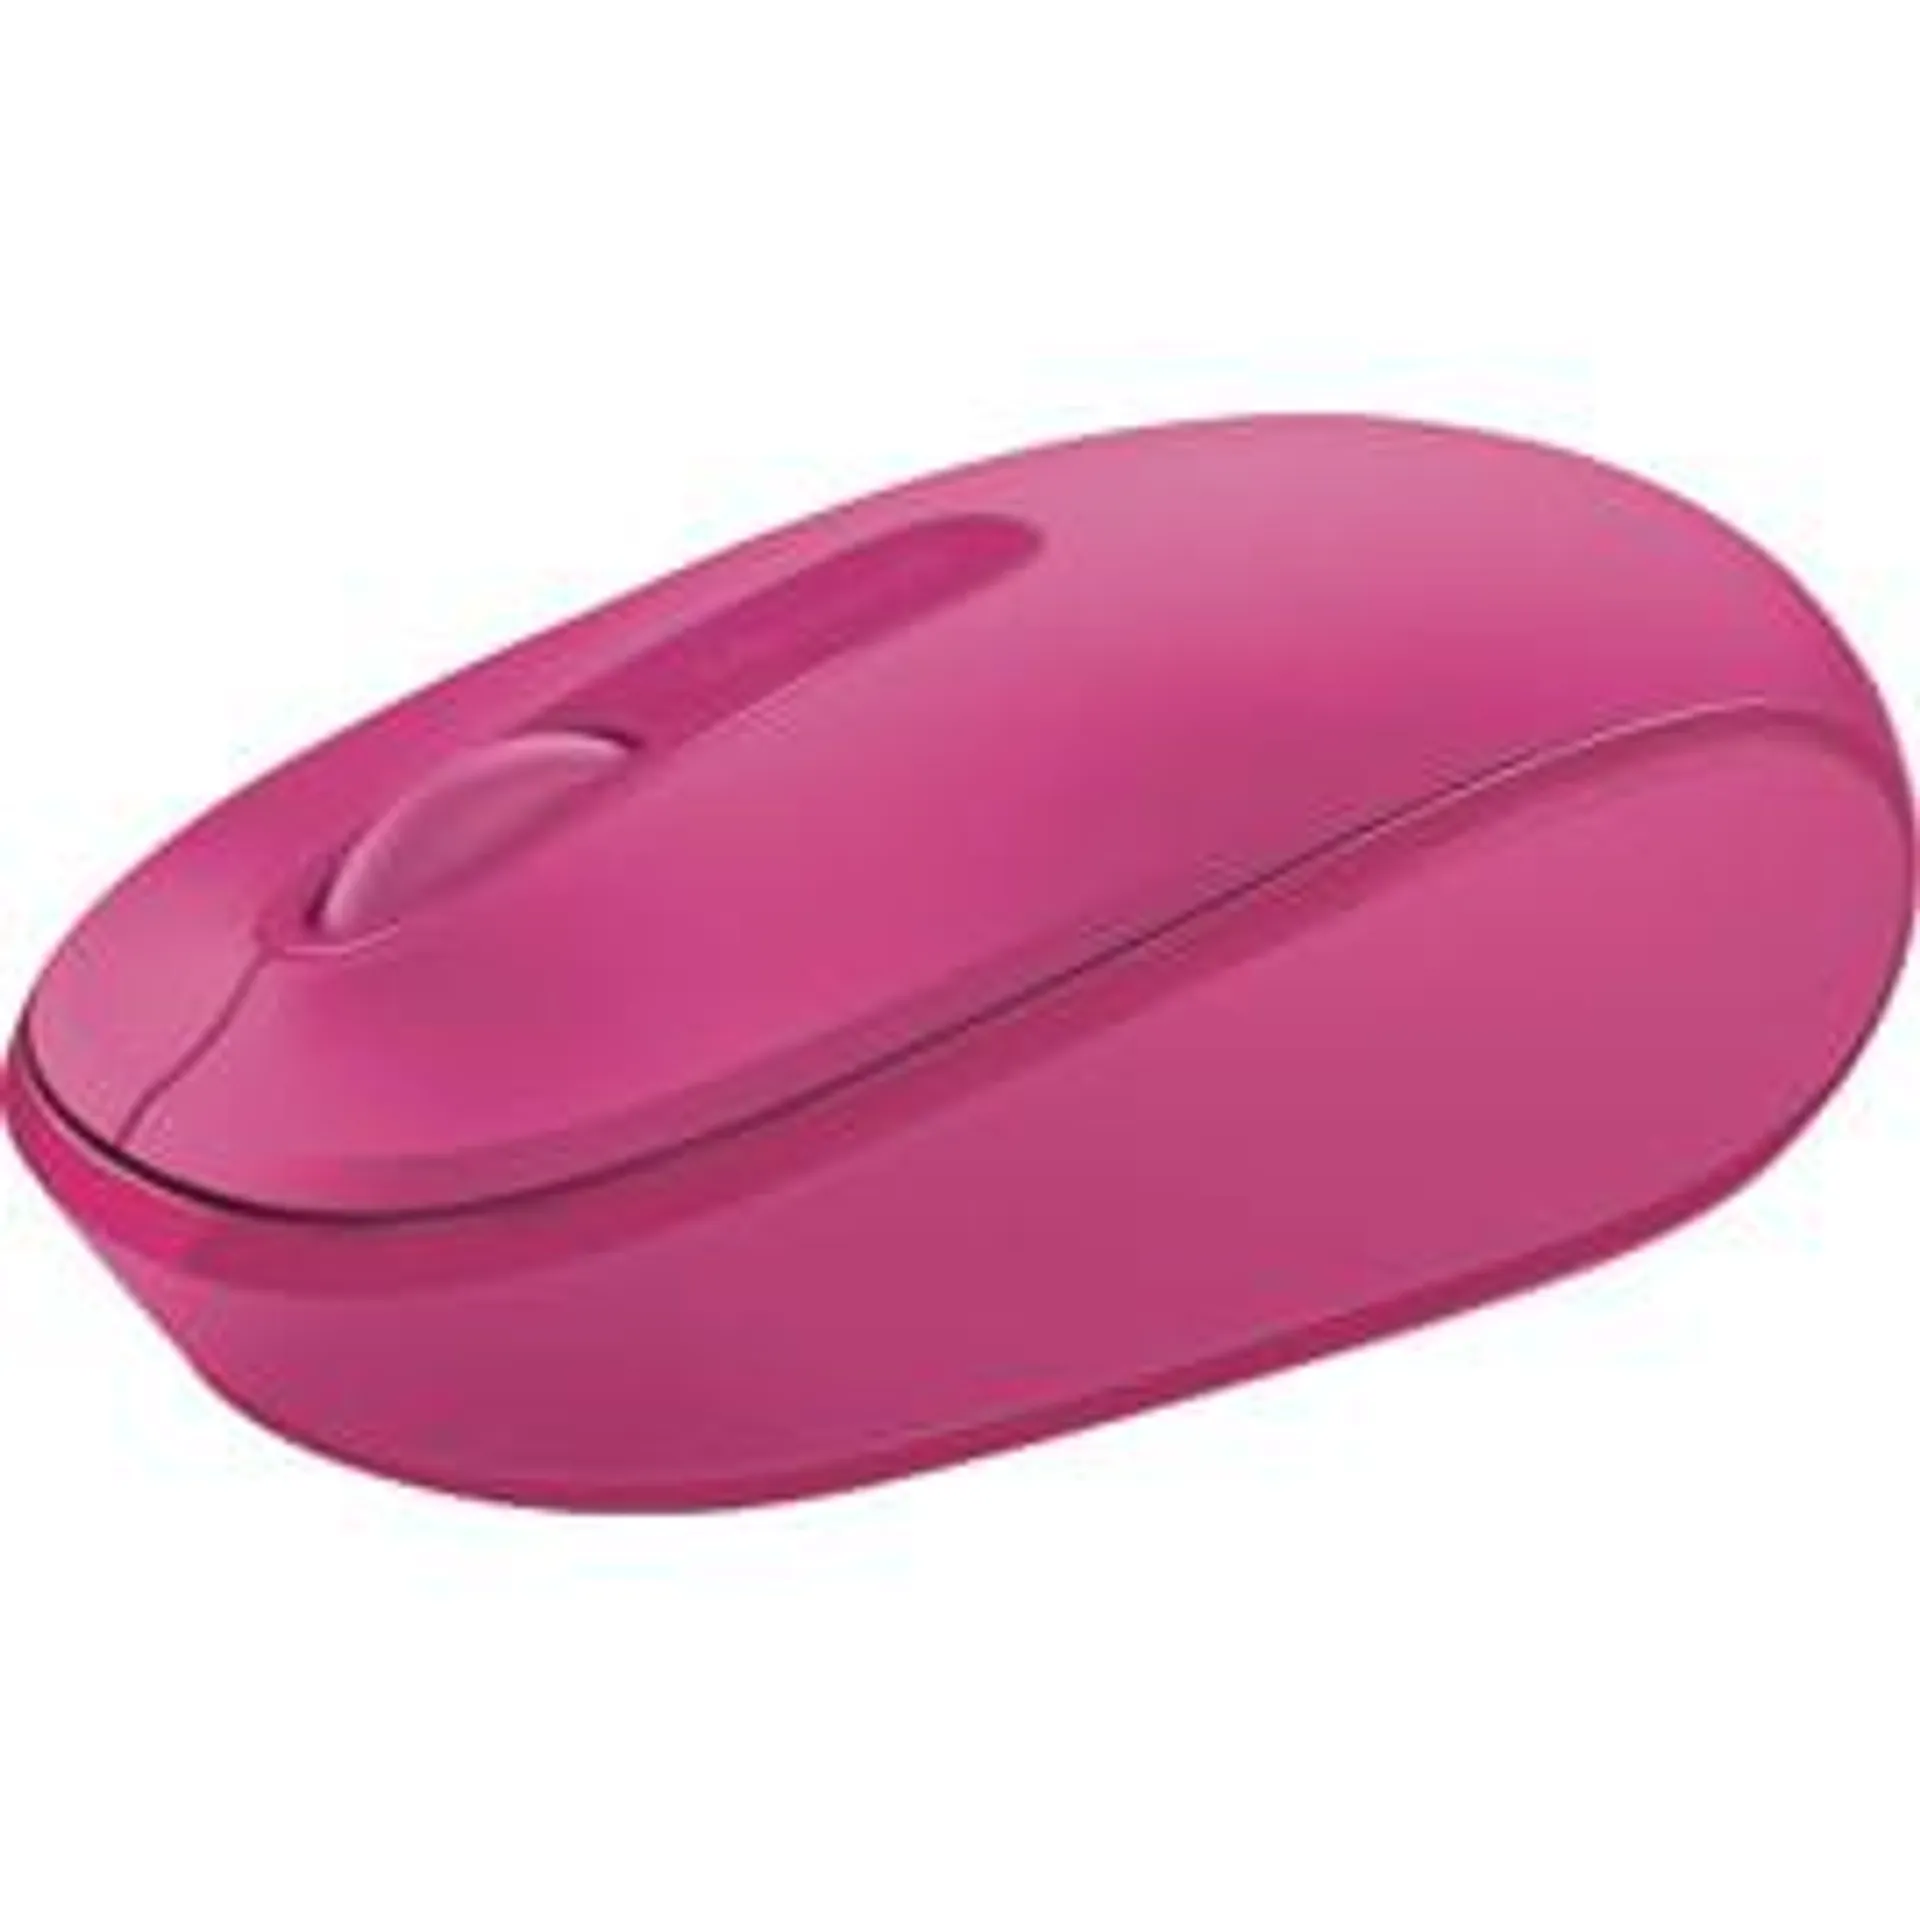 Microsoft Wireless Mobile Mouse 1850 (Magenta)